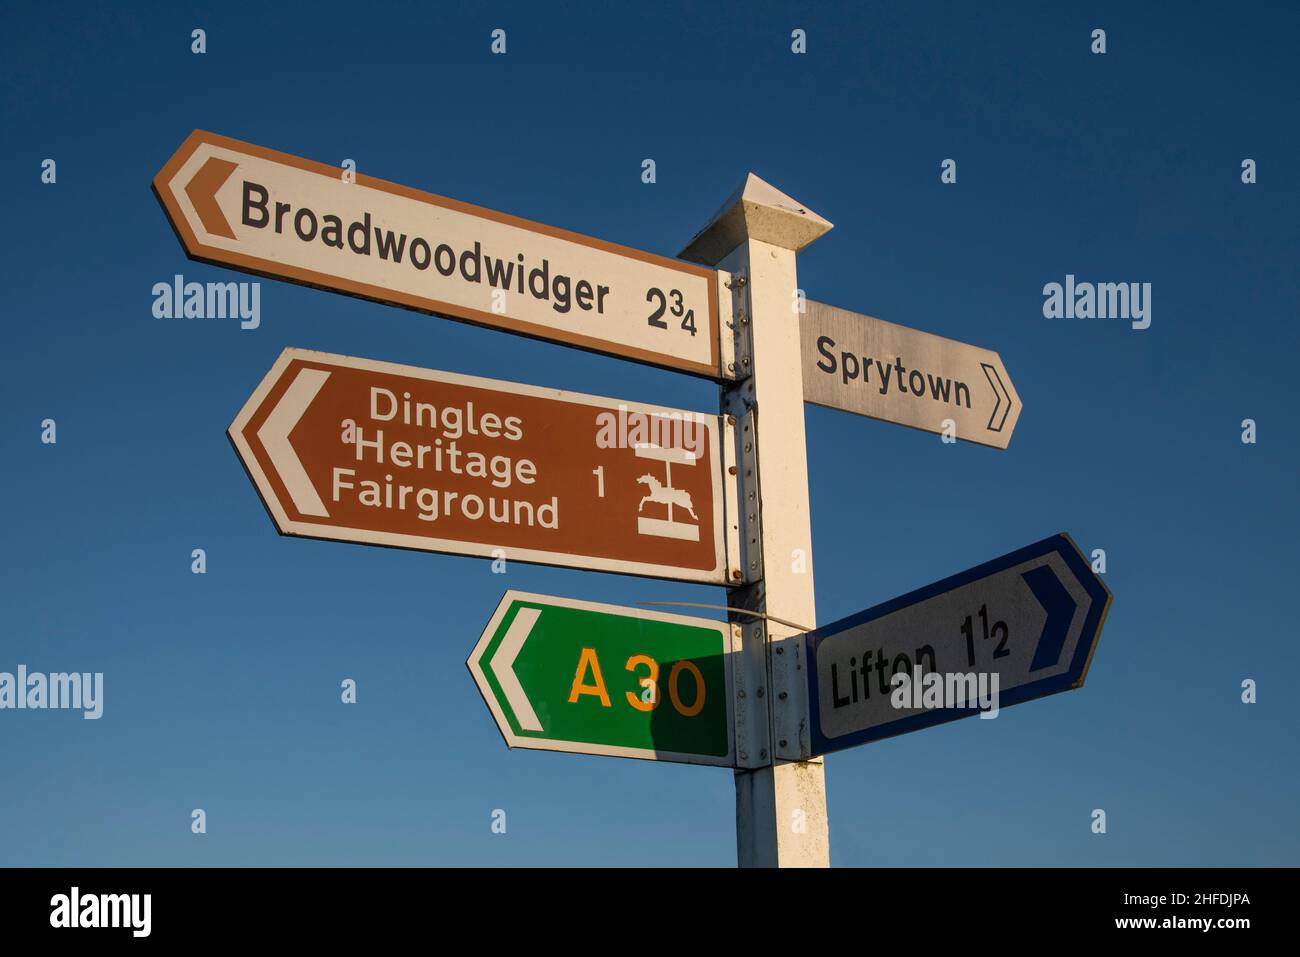 Road sign for motorists alongside a Devon highway, England, UK. Stock Photo